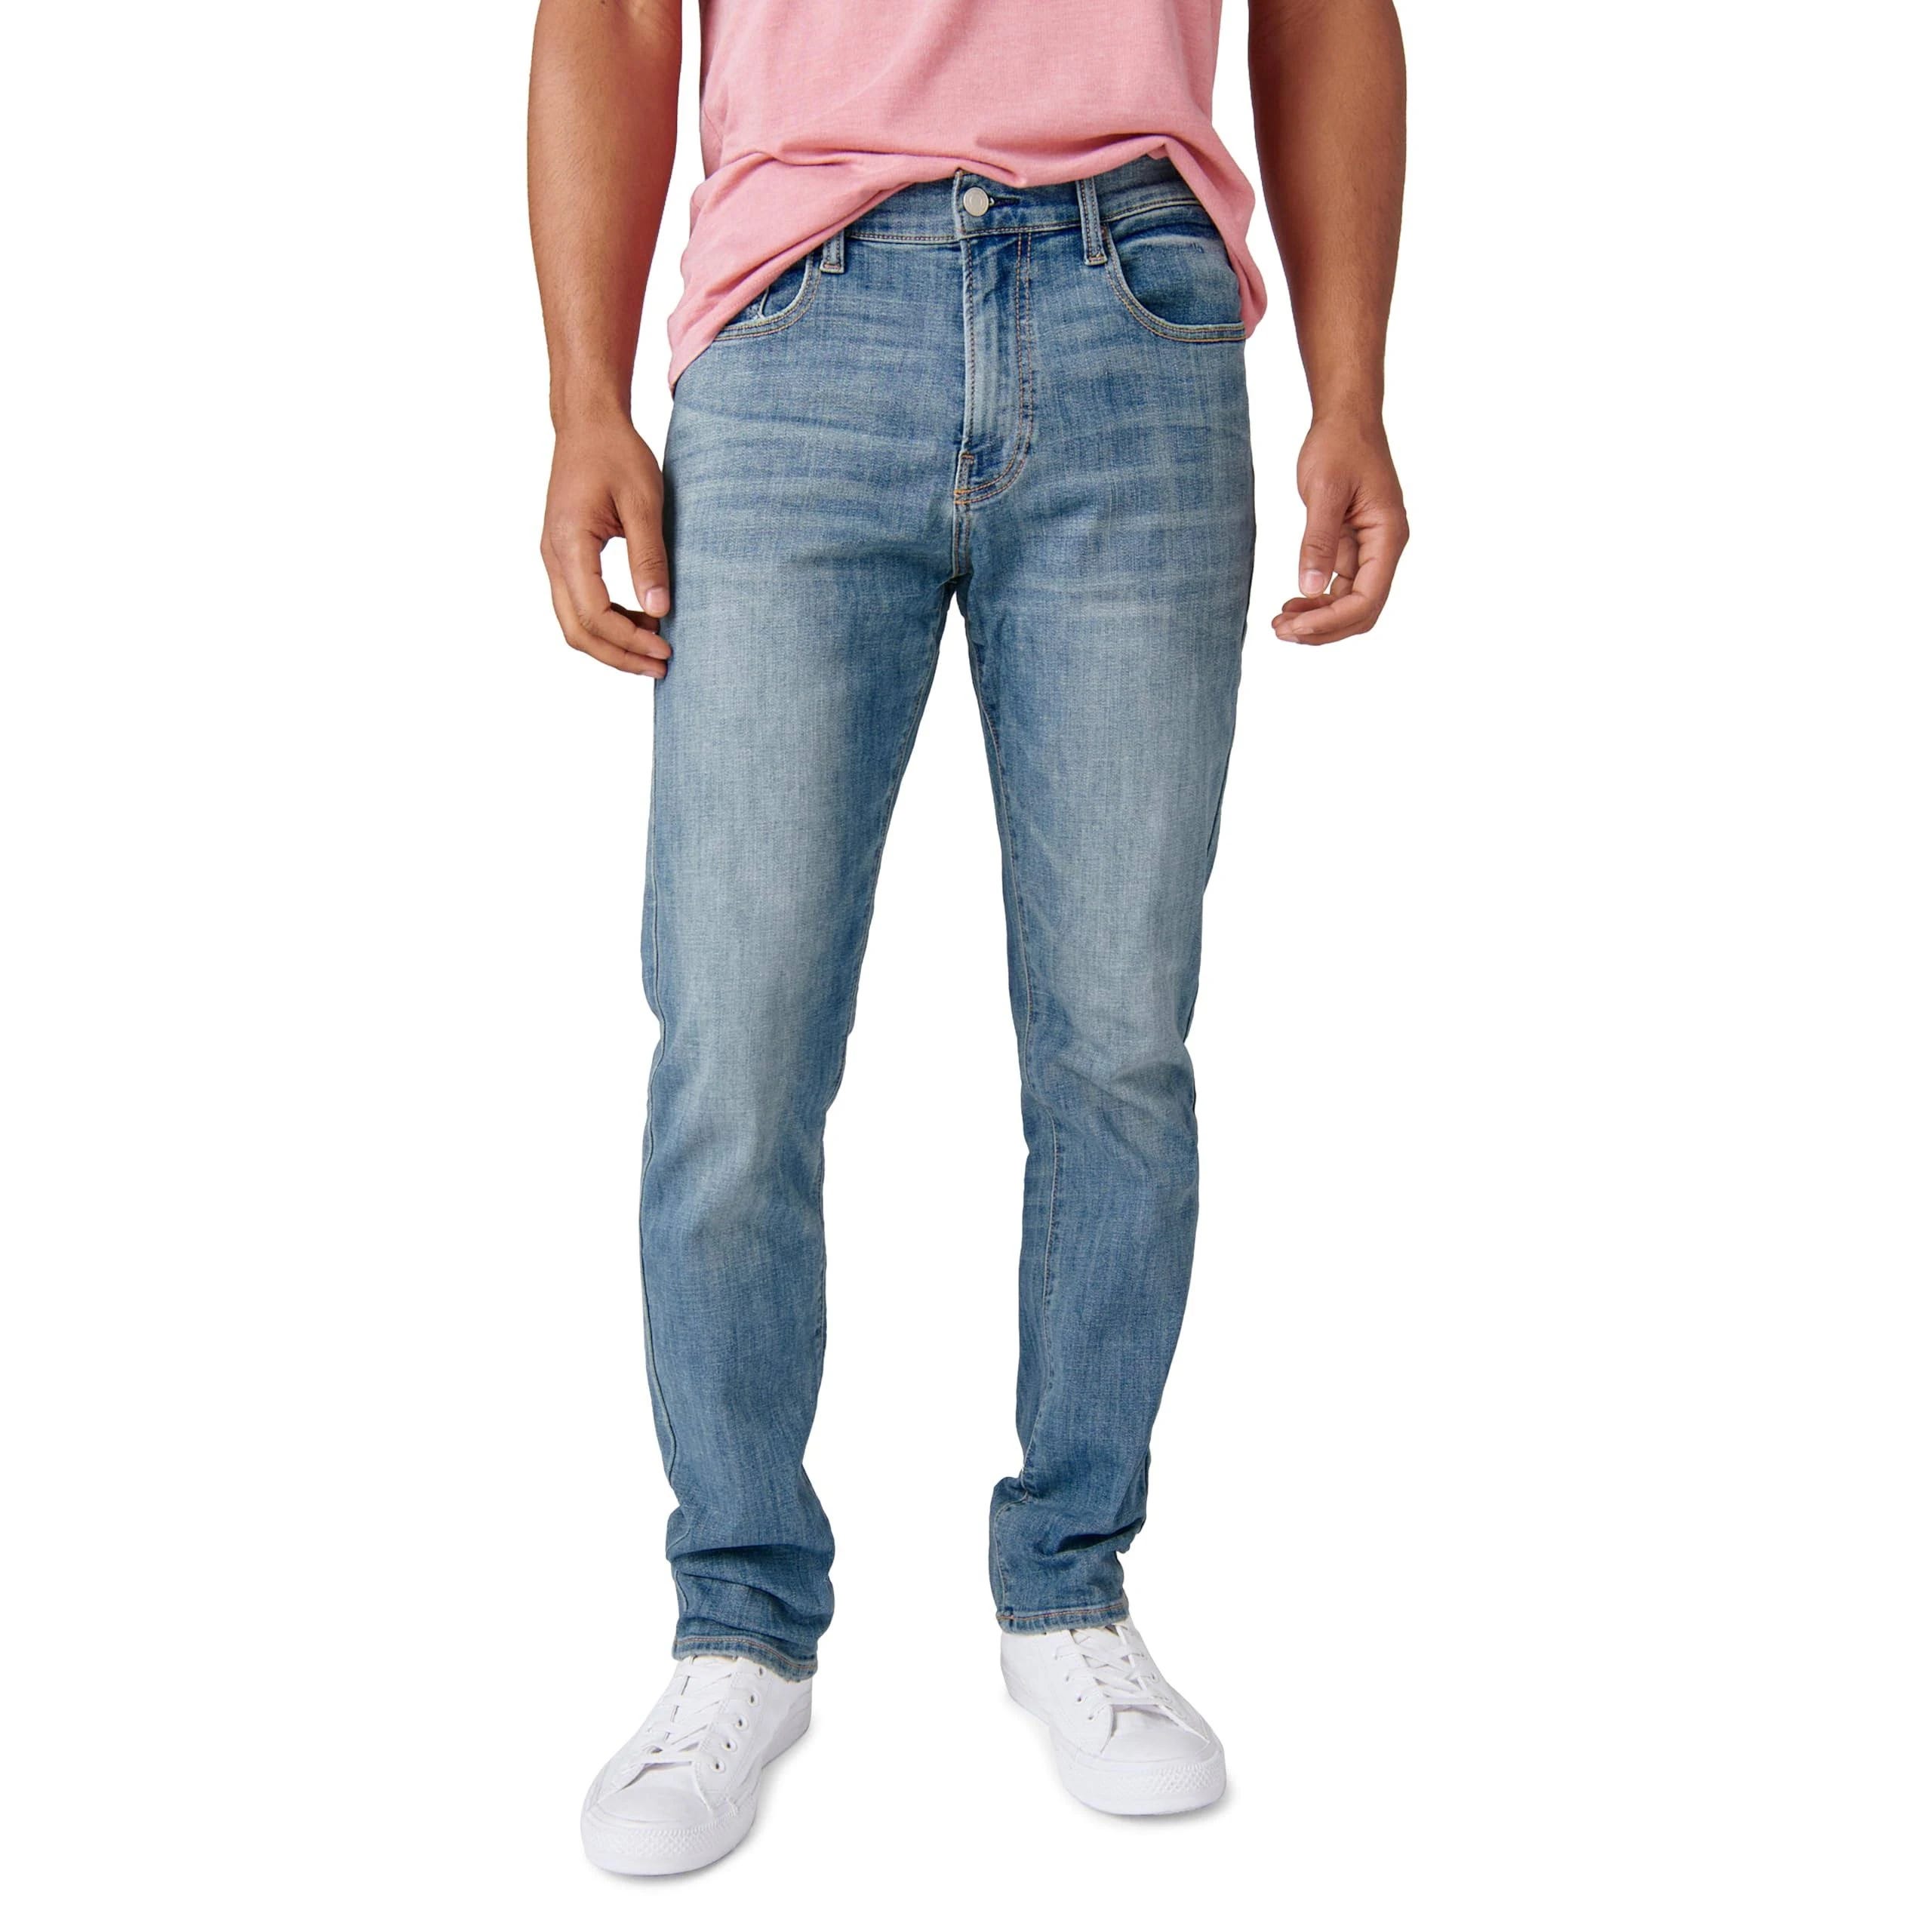 Stylish Men's Slim Leg Jeans - Fenwick (32